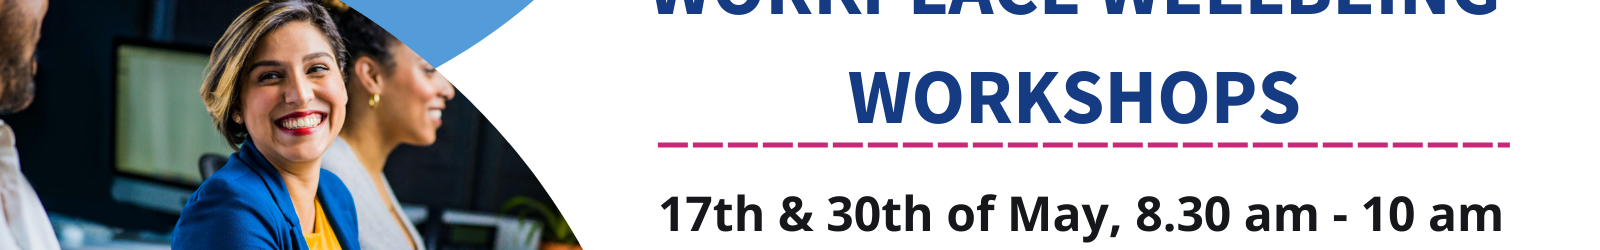 Workplace Wellbeing Workshop webinars open to North Devon businesses